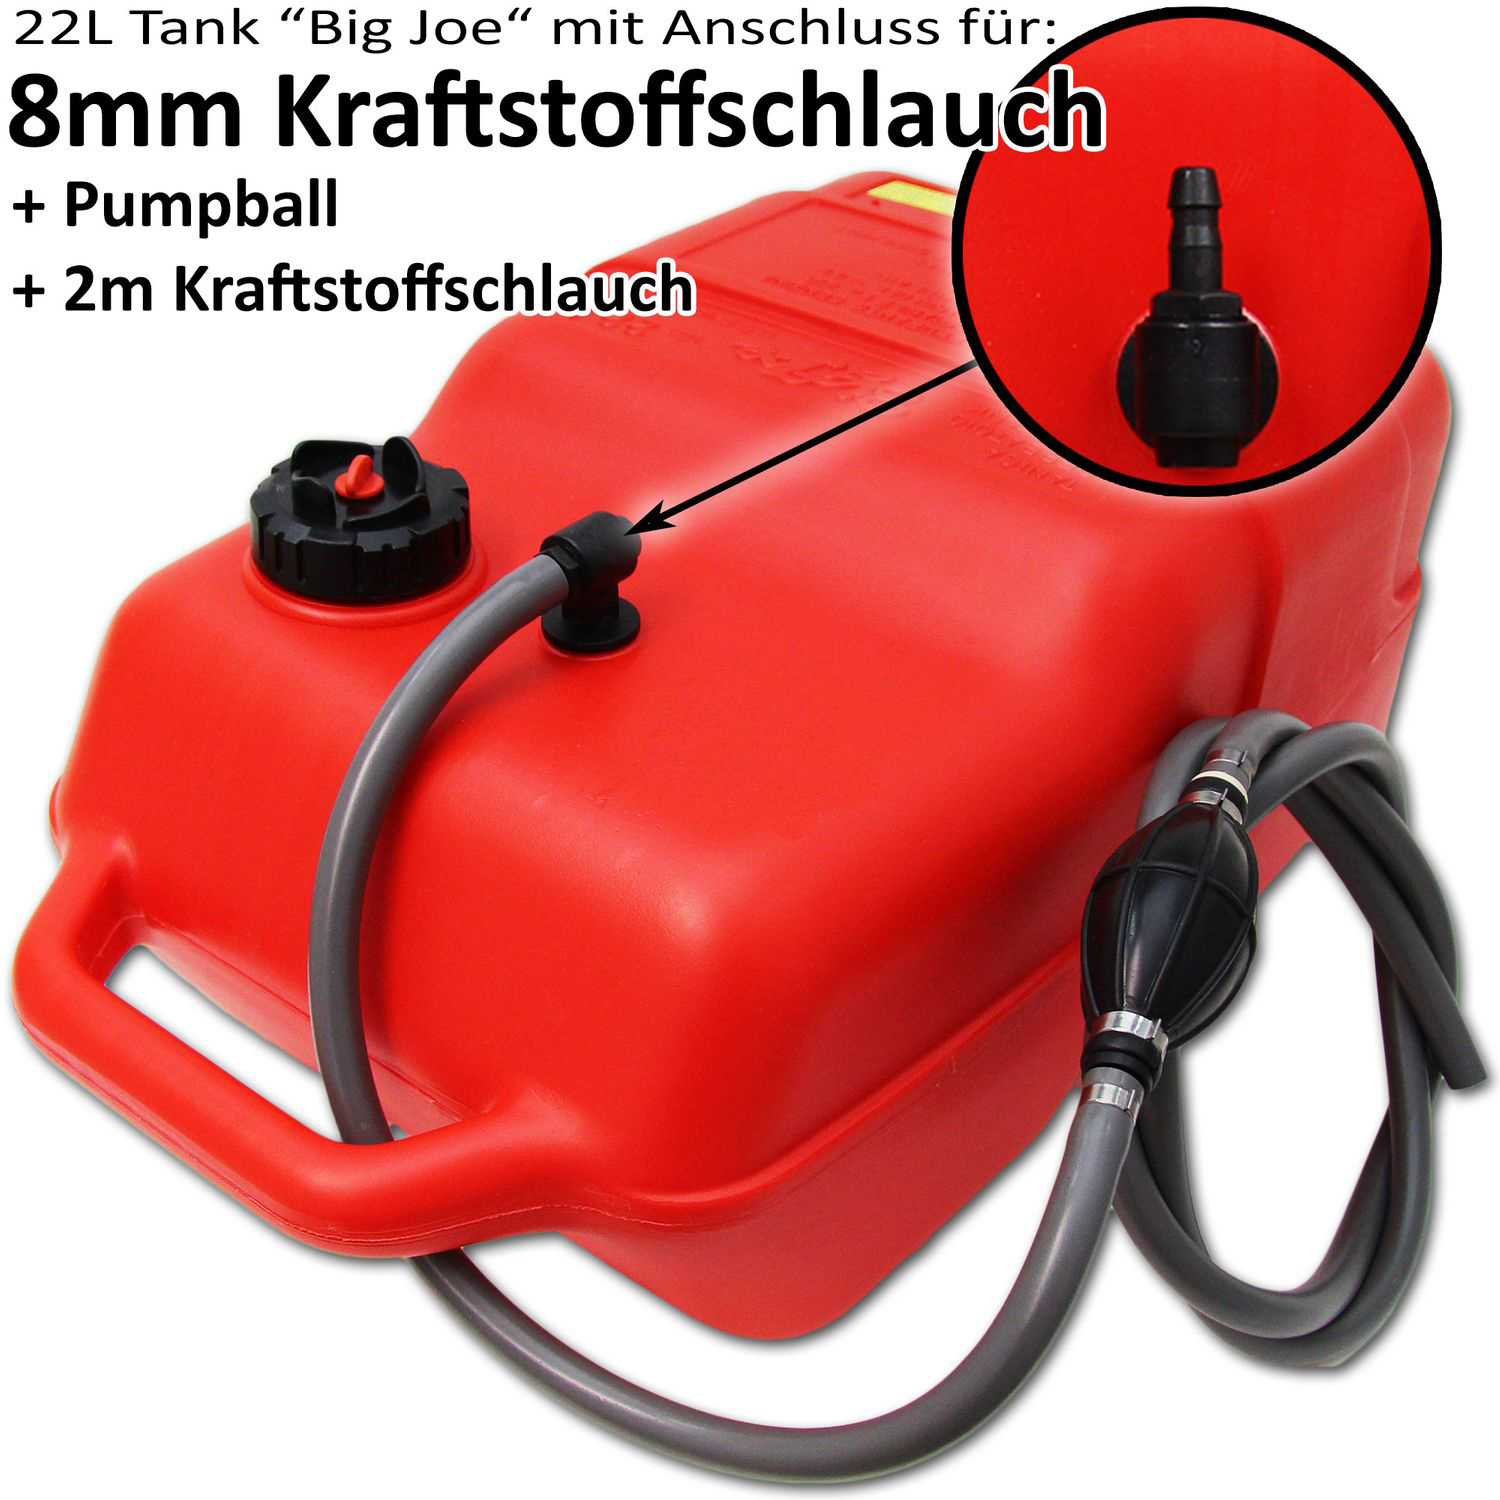 Kraftstofftank rot / Anschlussnippel (8mm) / 2m Schlauch